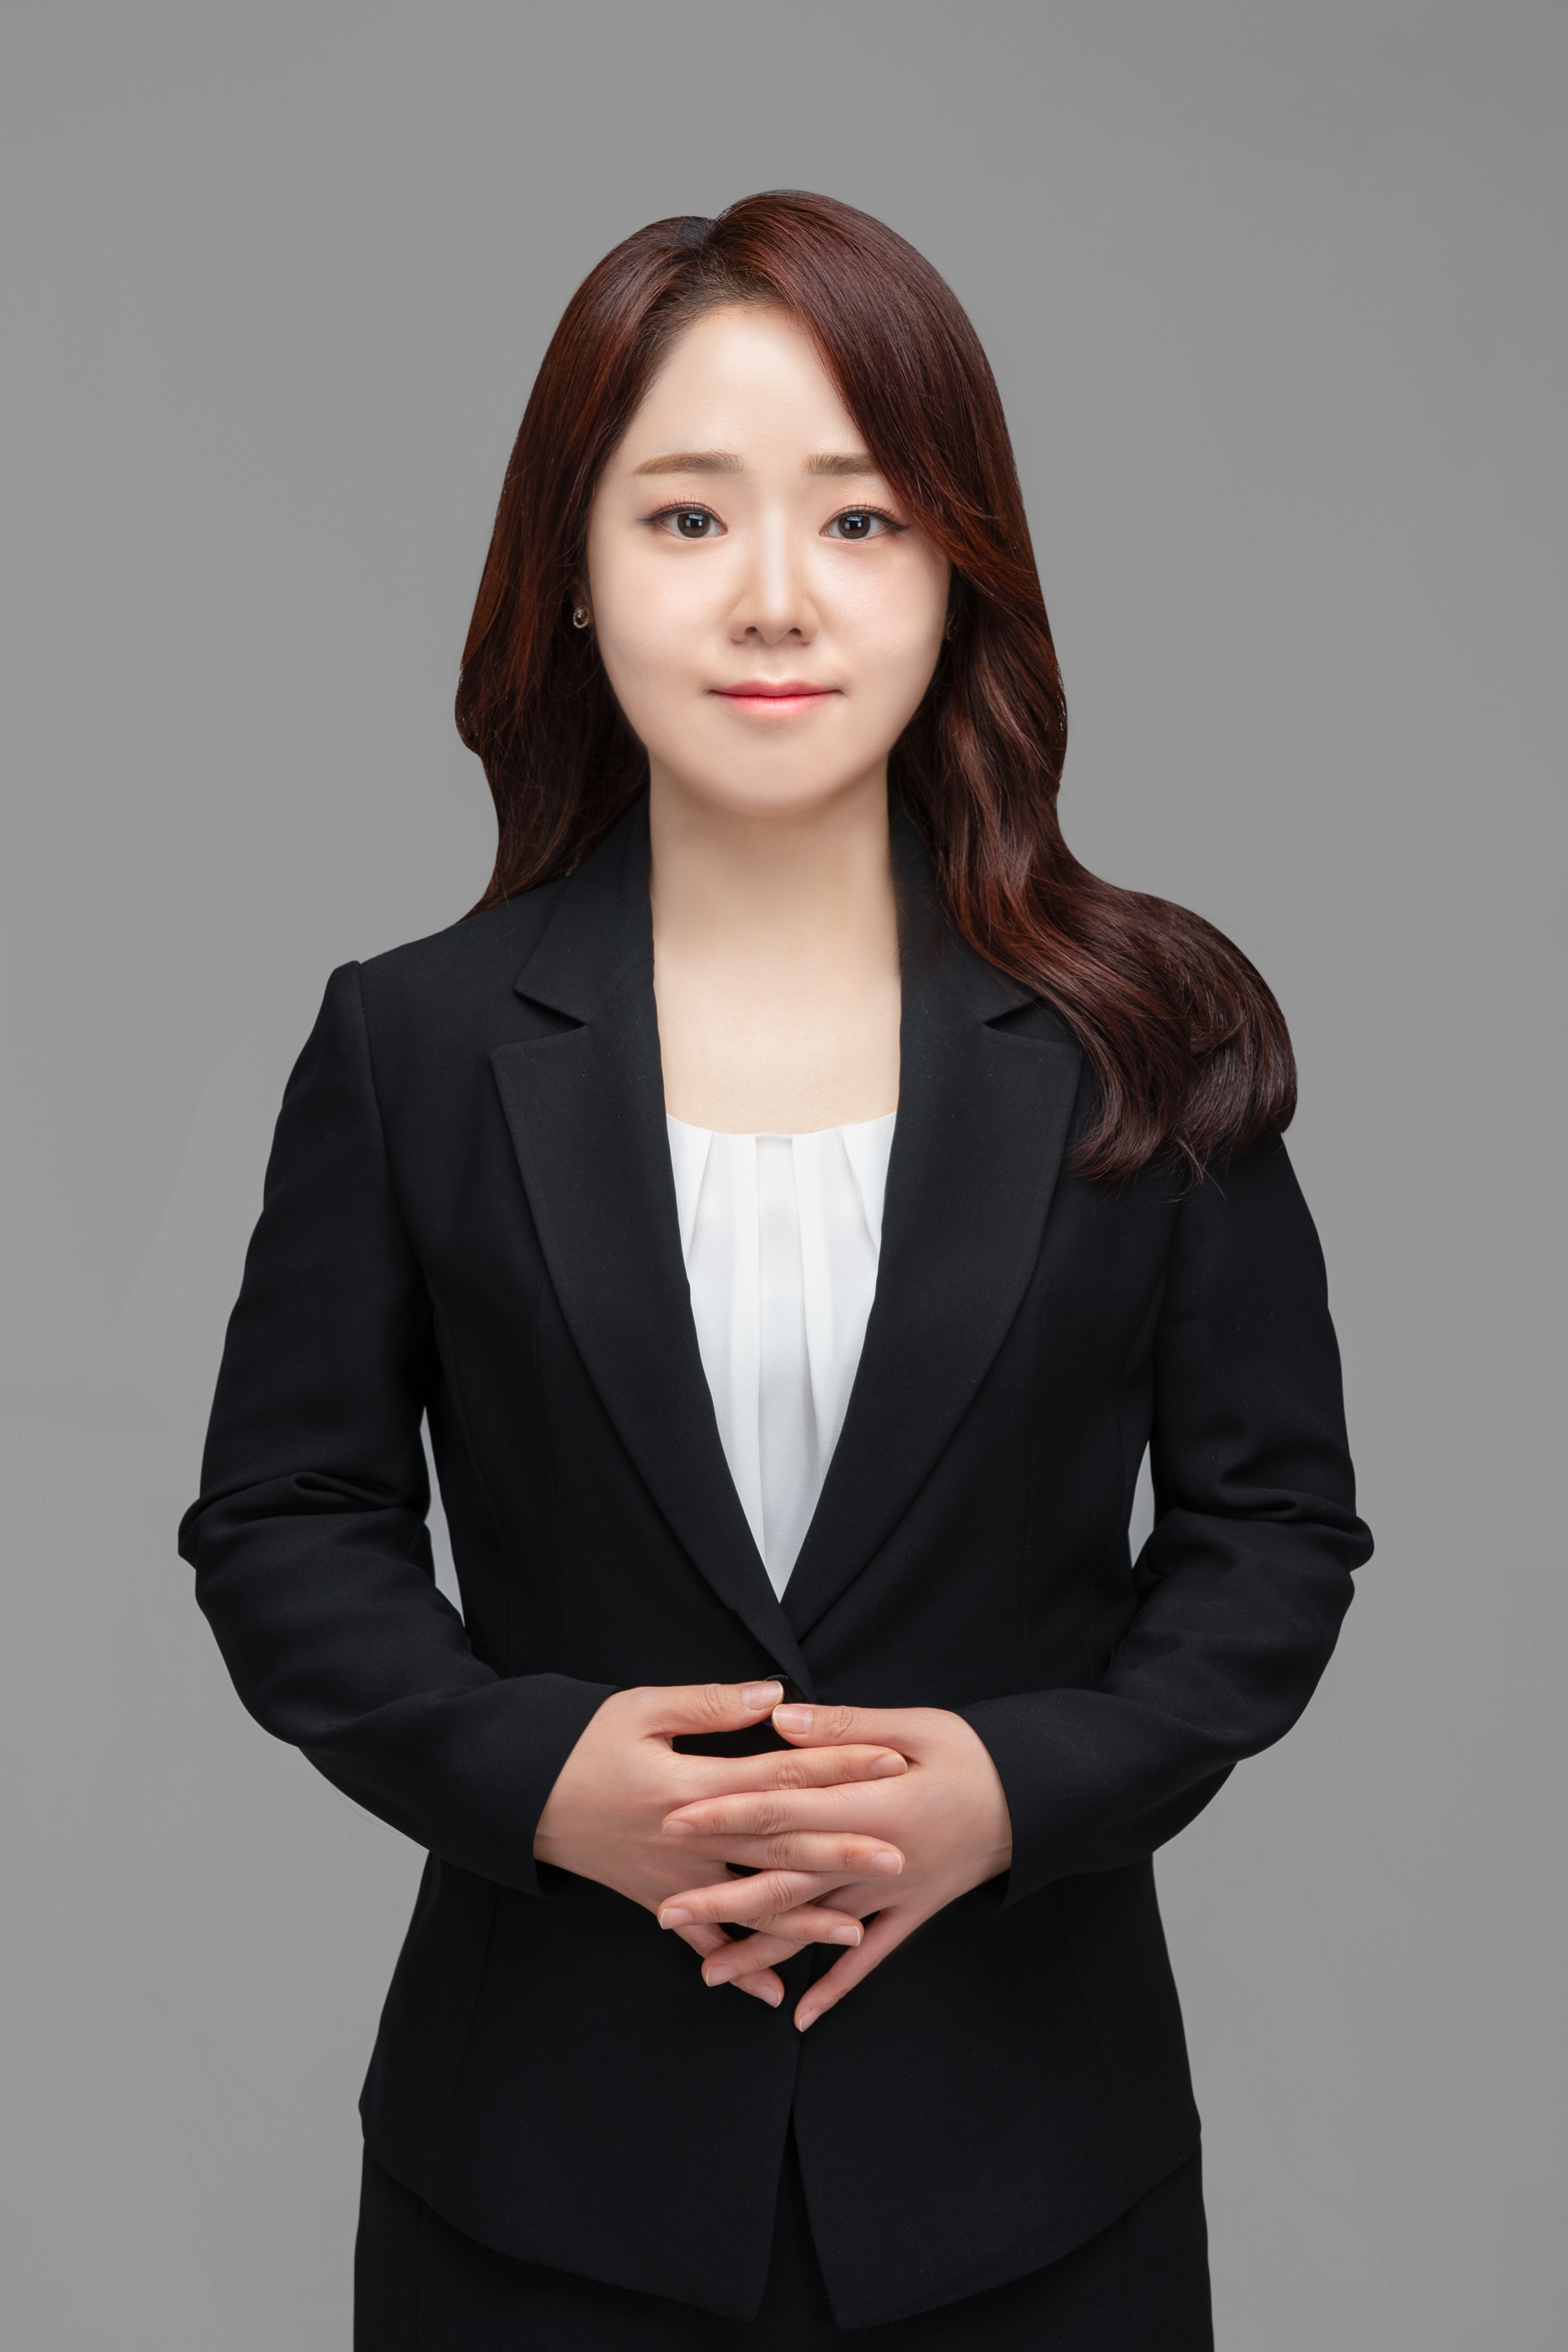 Choi Hyesoo